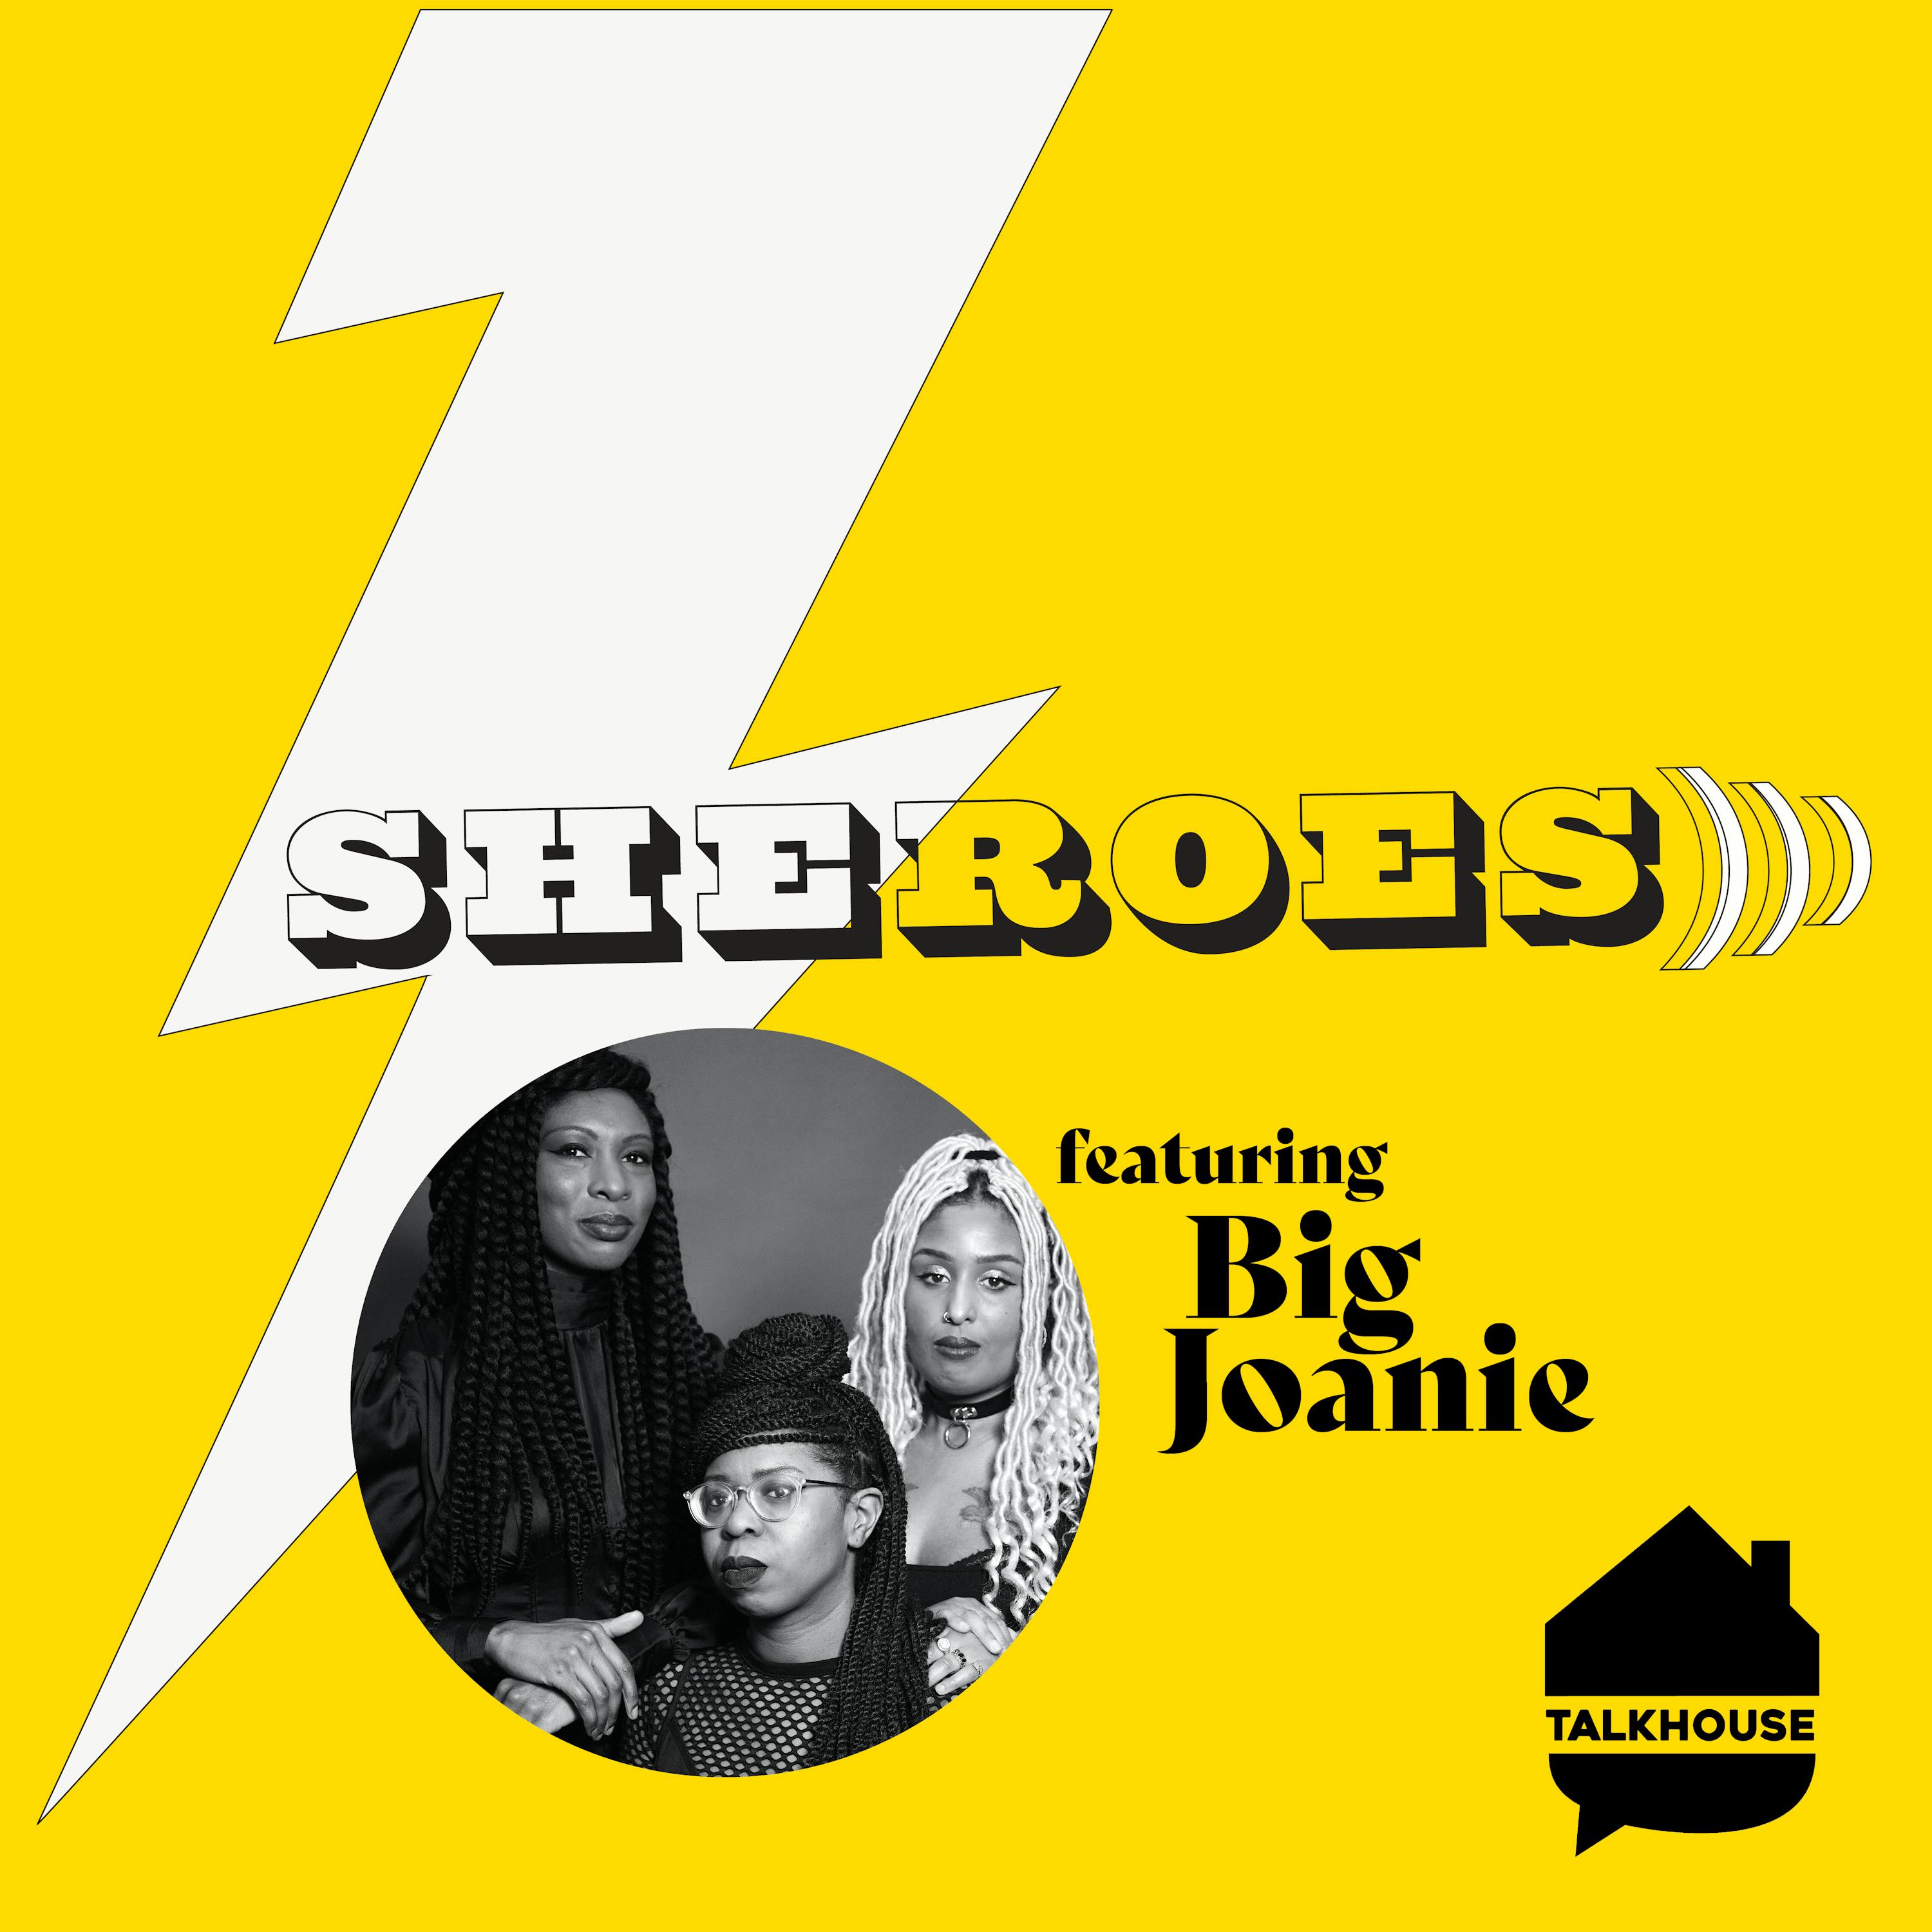 A SHEROES Journey: Big Joanie